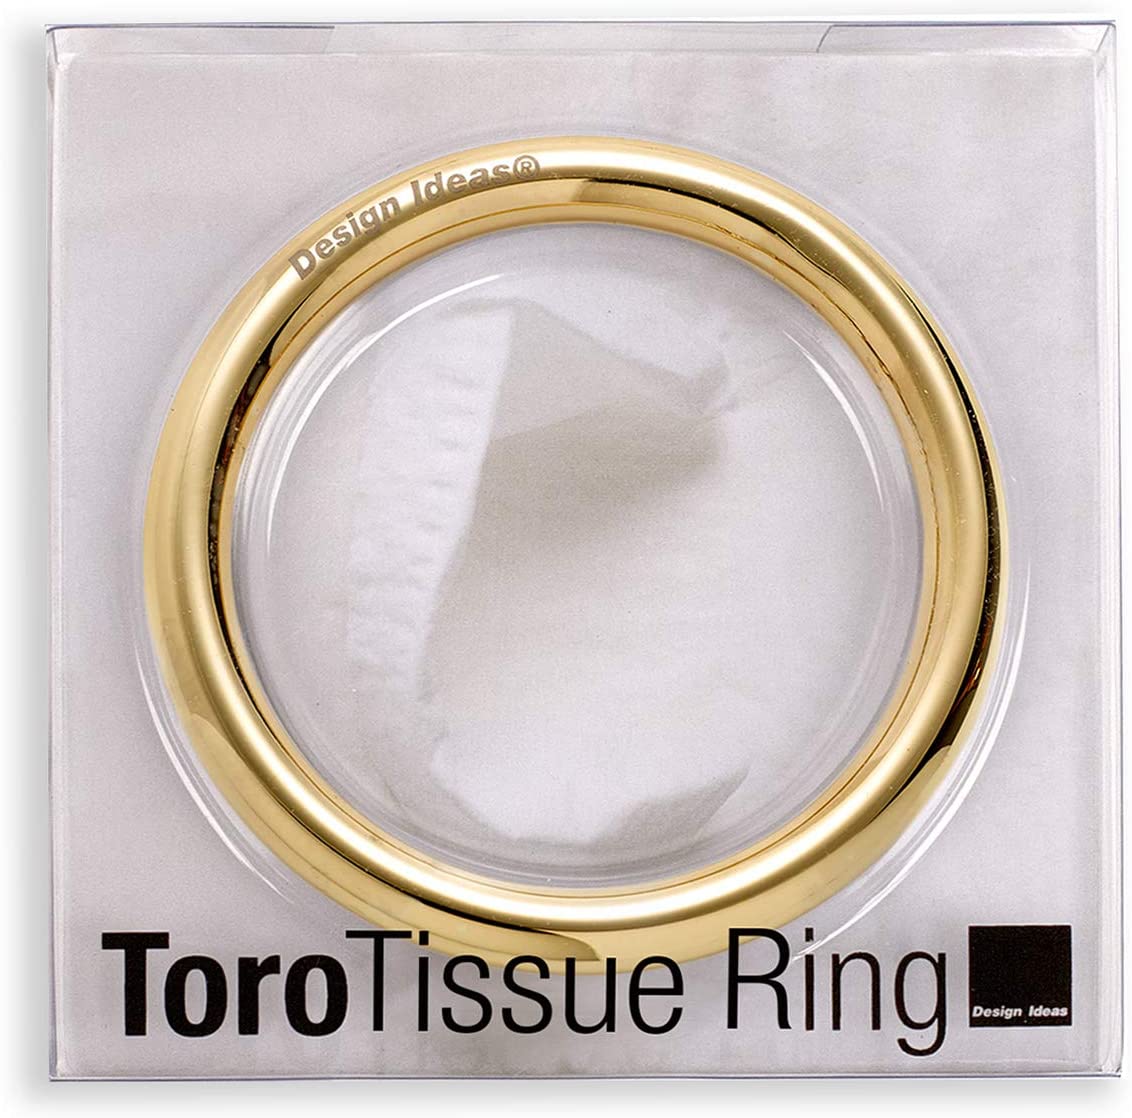 Toro Tissue Ring